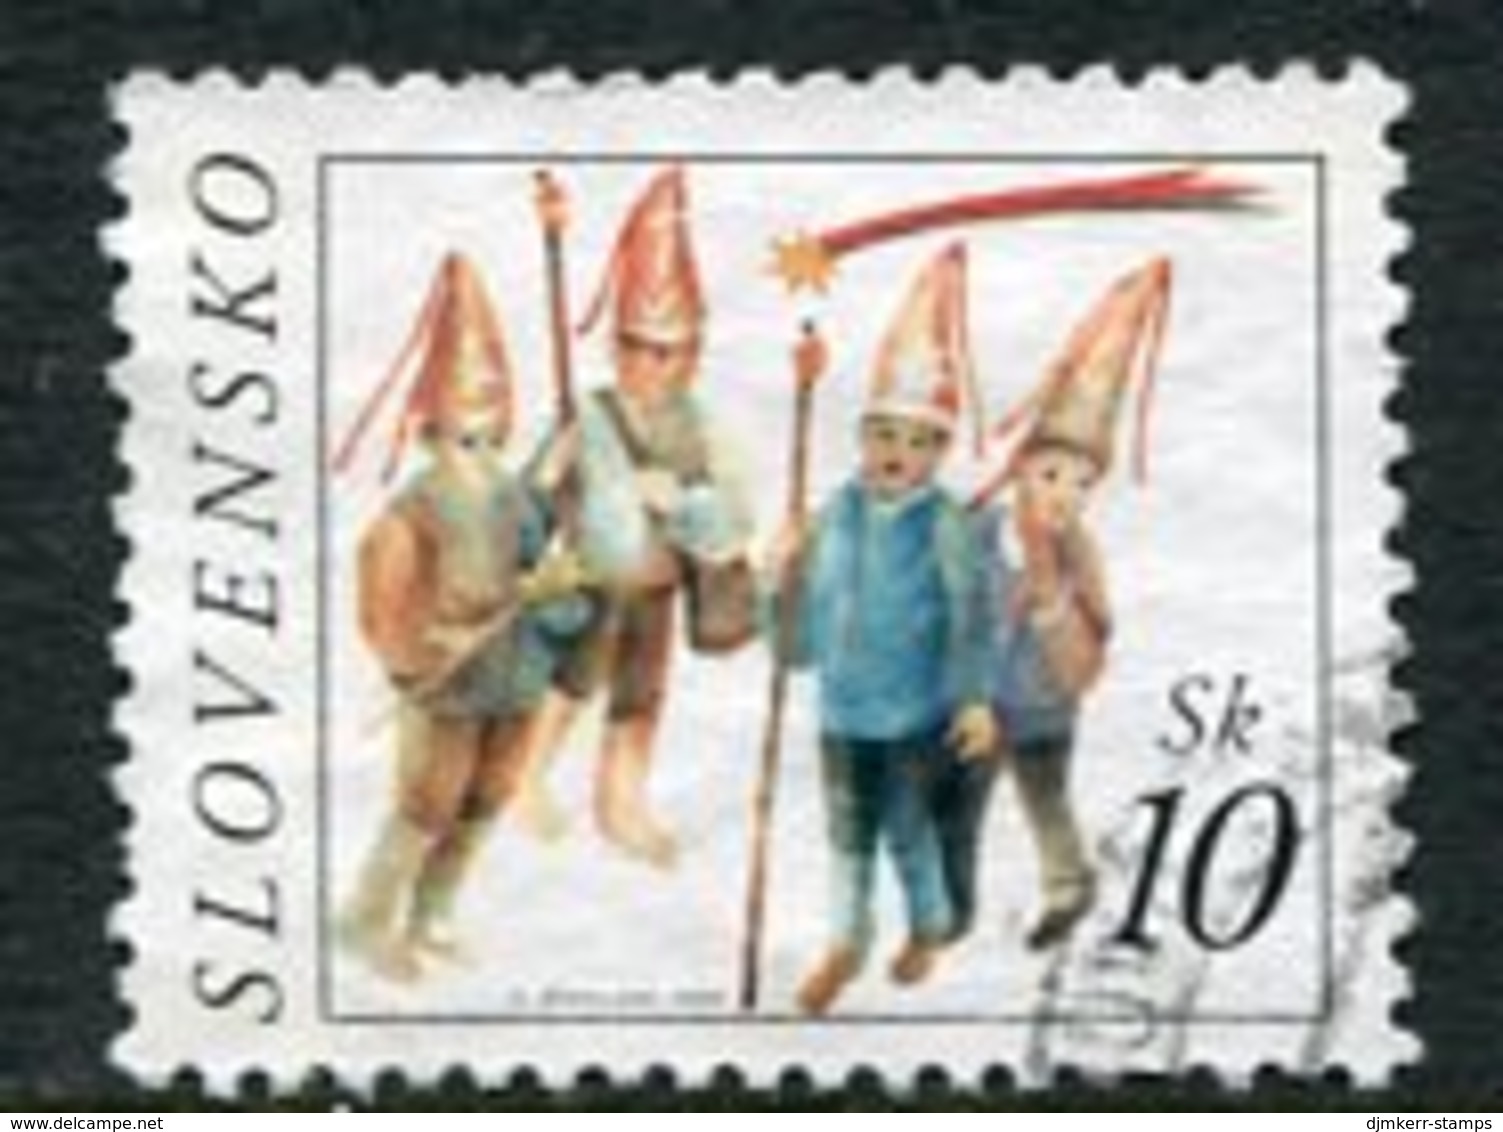 SLOVAKIA 2006 Christmas Used.  Michel 546 - Used Stamps